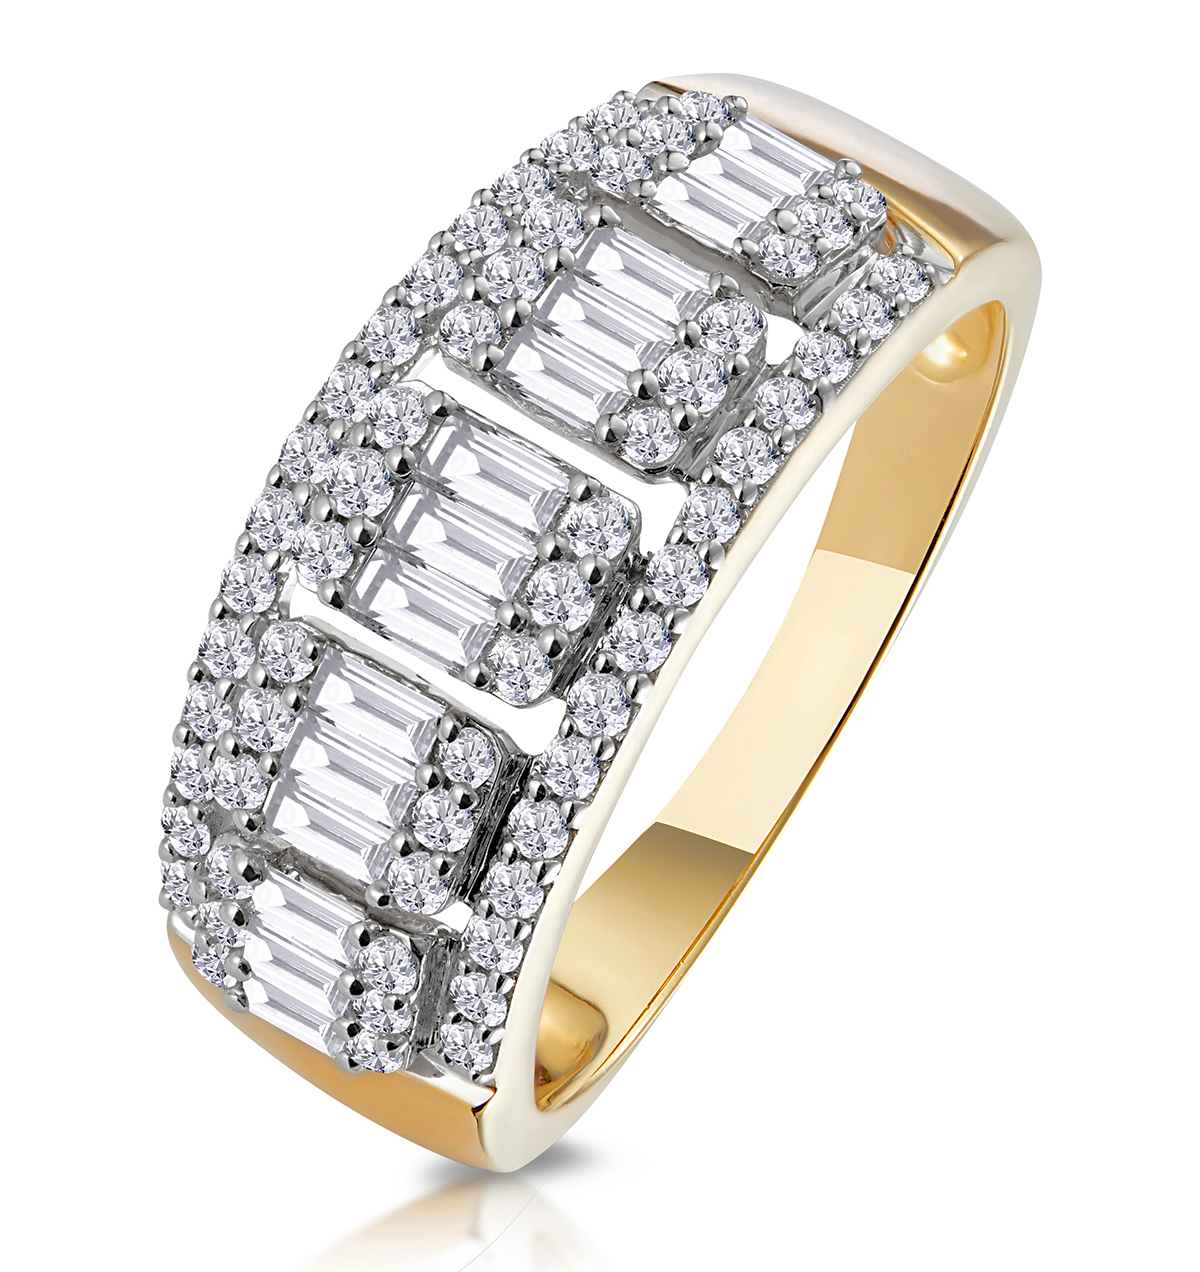 Baguette Cut Diamond Rings | The Diamond Store